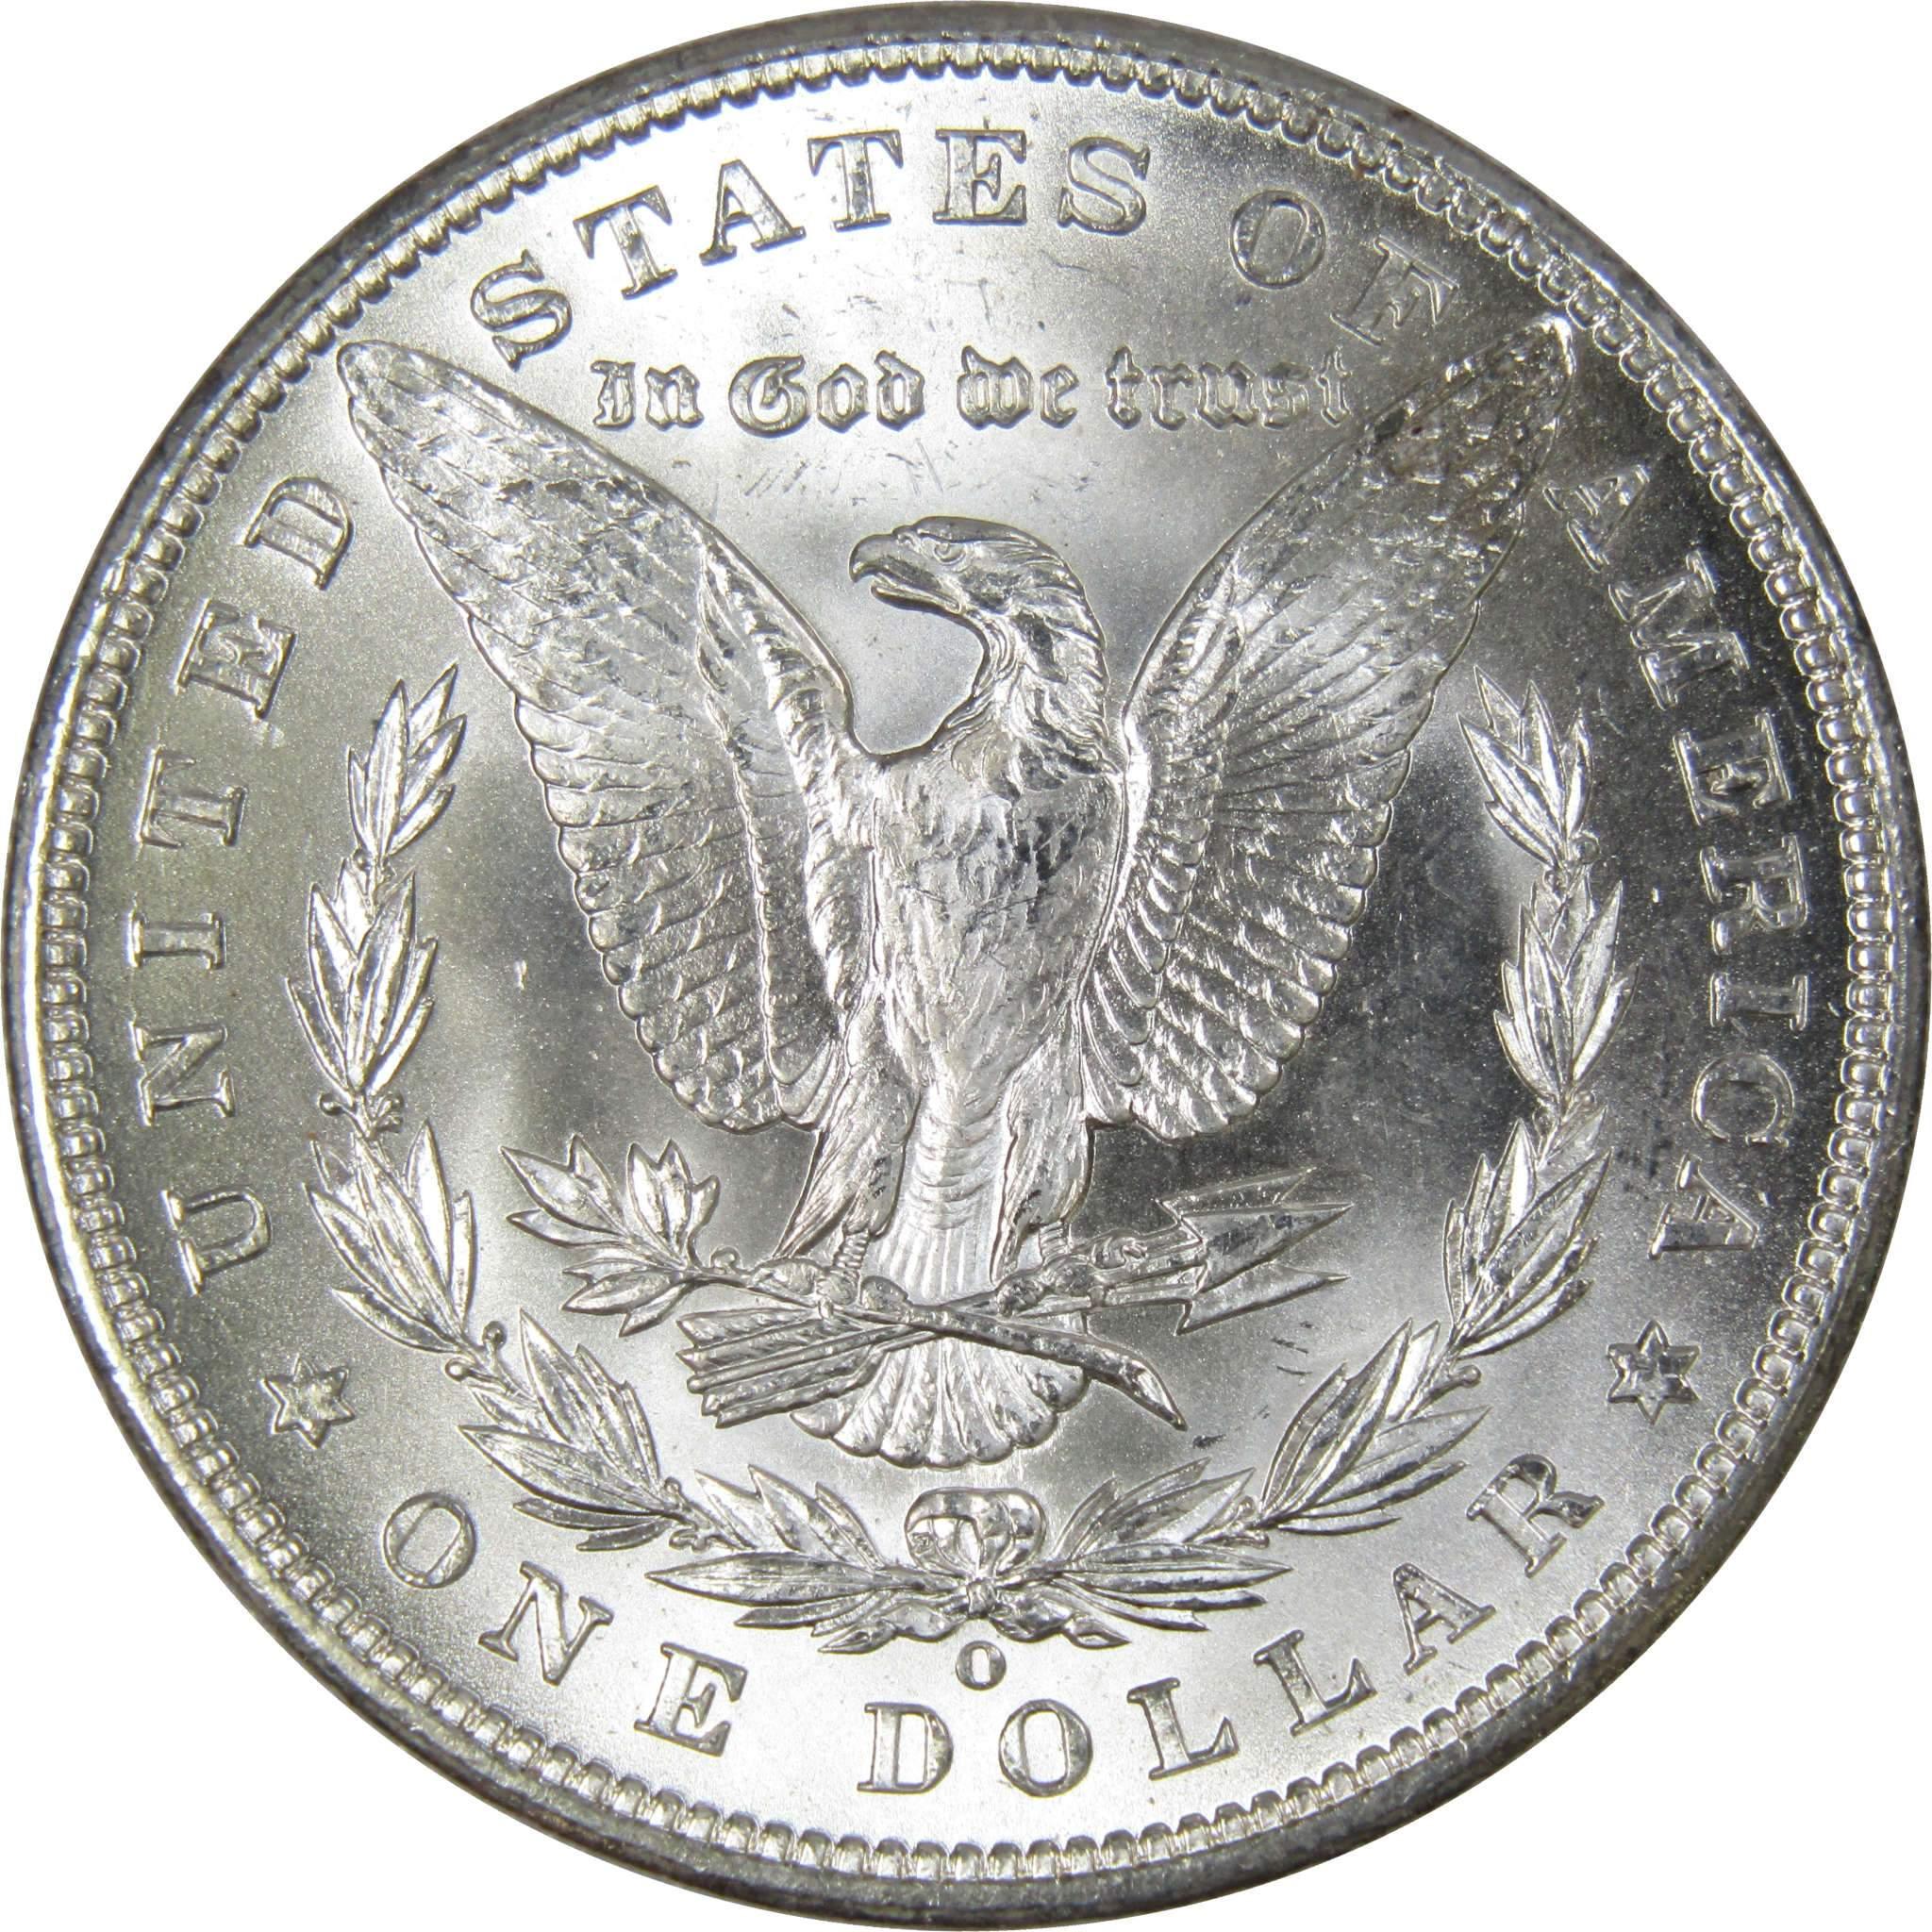 1898 O Morgan Dollar BU Choice Uncirculated Mint State 90% Silver $1 US Coin - Morgan coin - Morgan silver dollar - Morgan silver dollar for sale - Profile Coins &amp; Collectibles